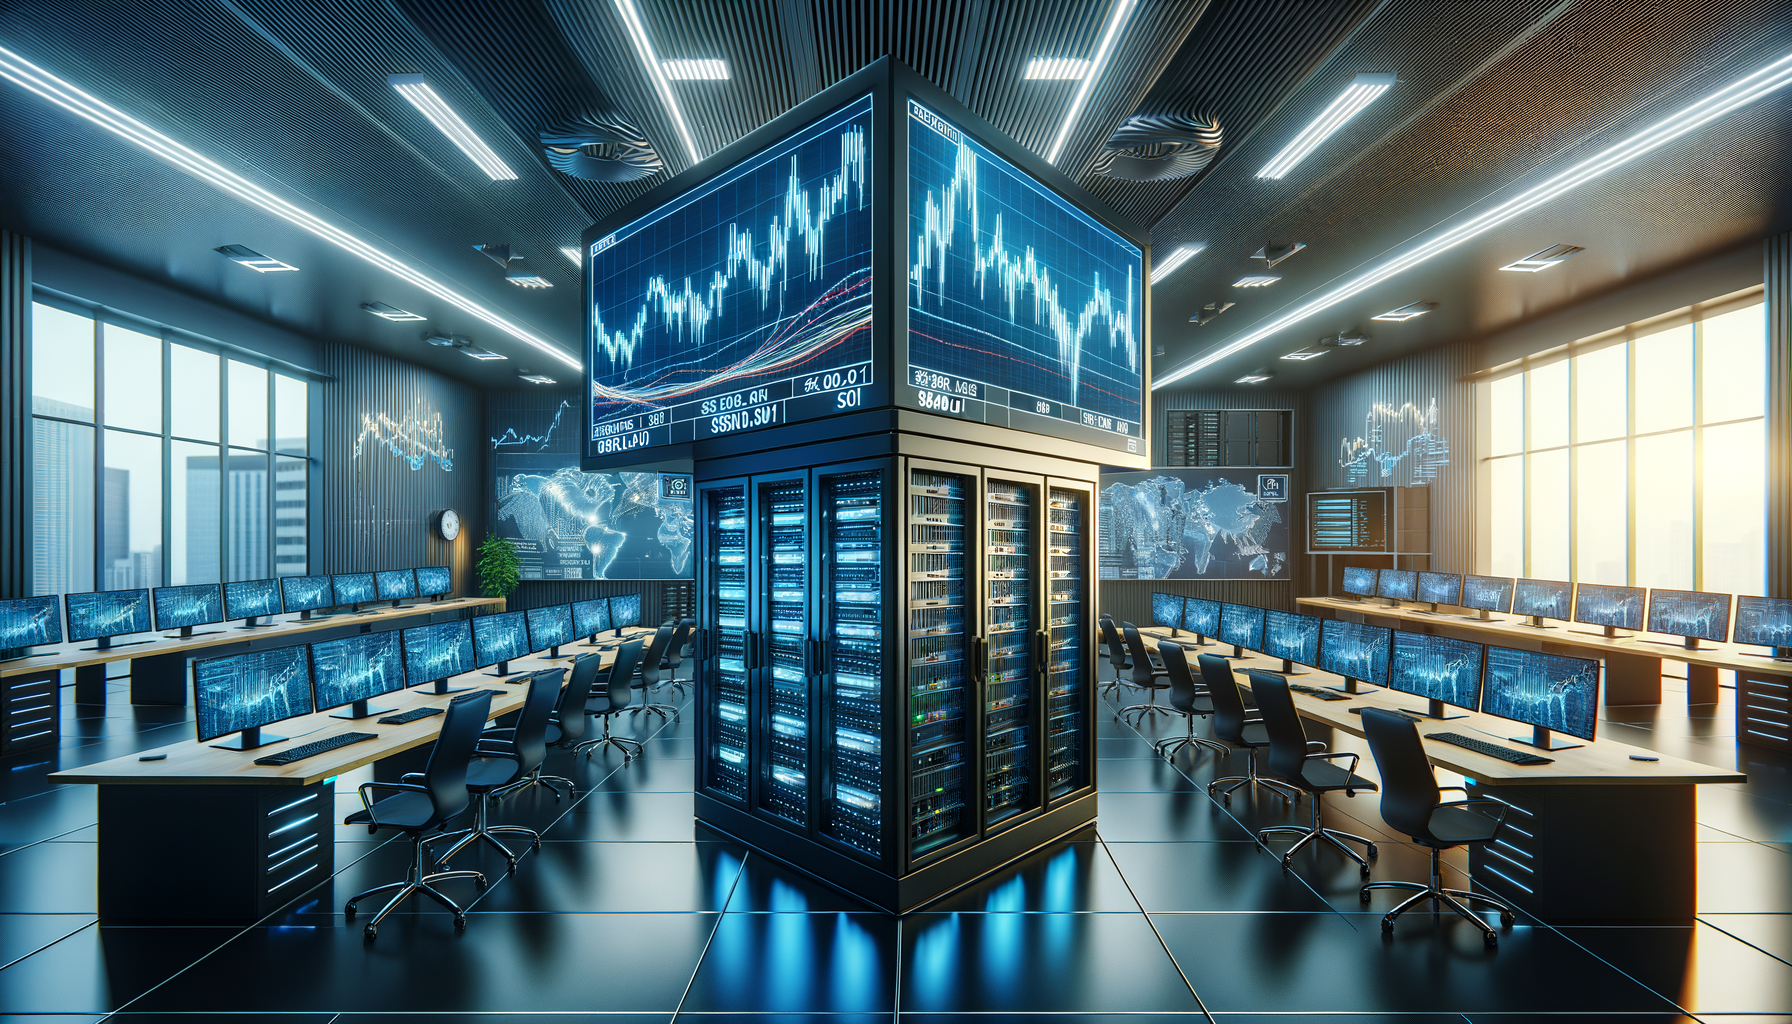 Super Micro Computer, Inc. Stock Analysis: Volatility Ahead Amid Recent Price Drop